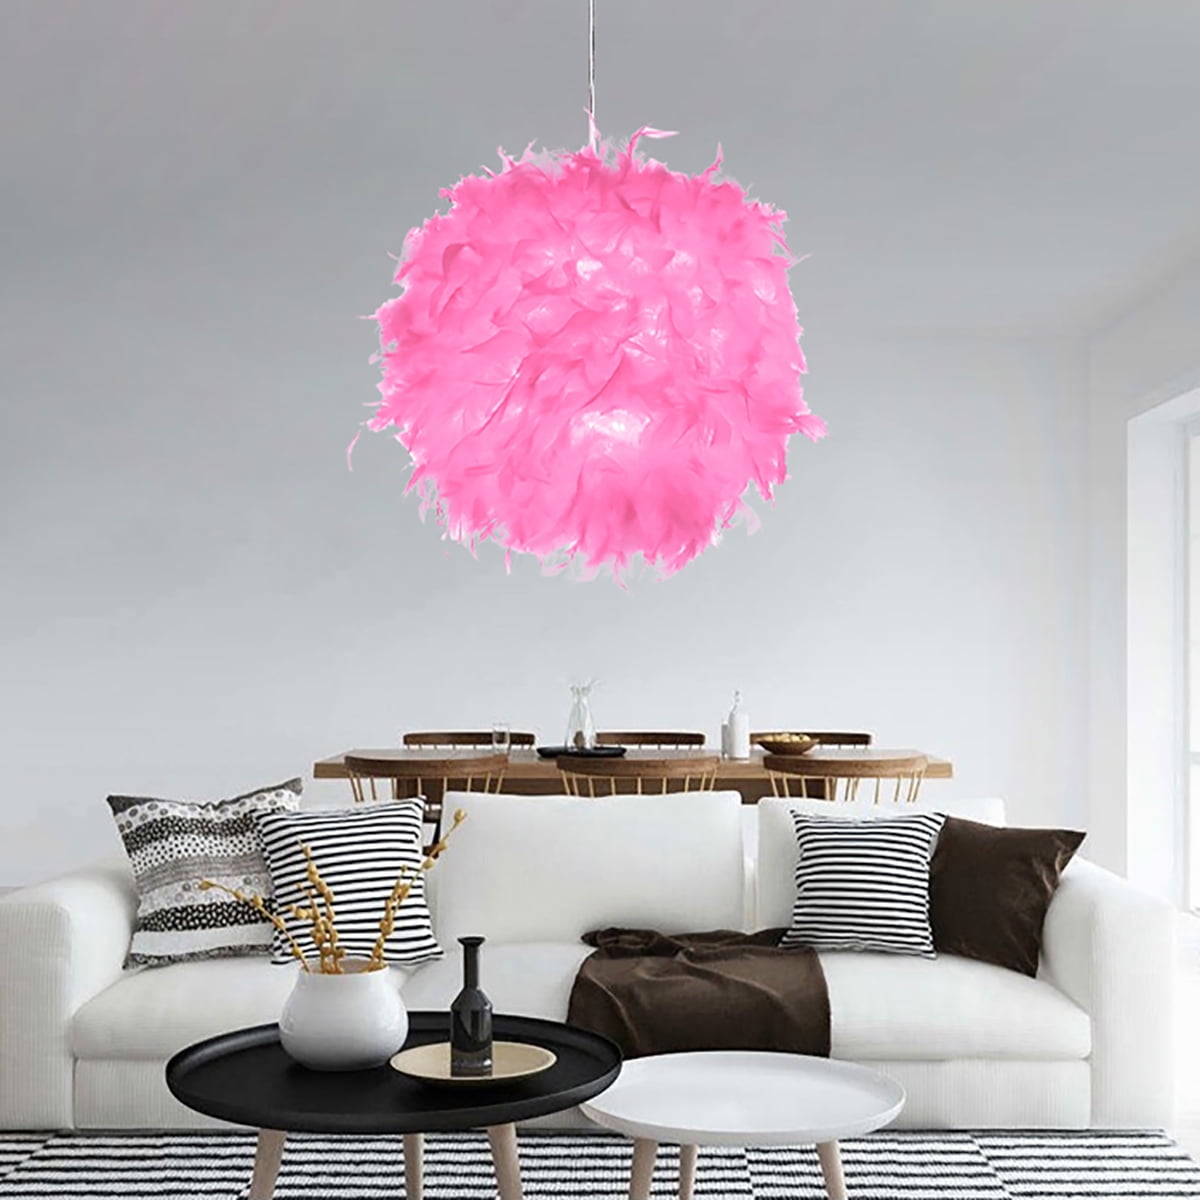 Feather Ball Lamp Shade Ceiling Pendant Light Bedroom Living Room Decor 110 220v Walmart Canada